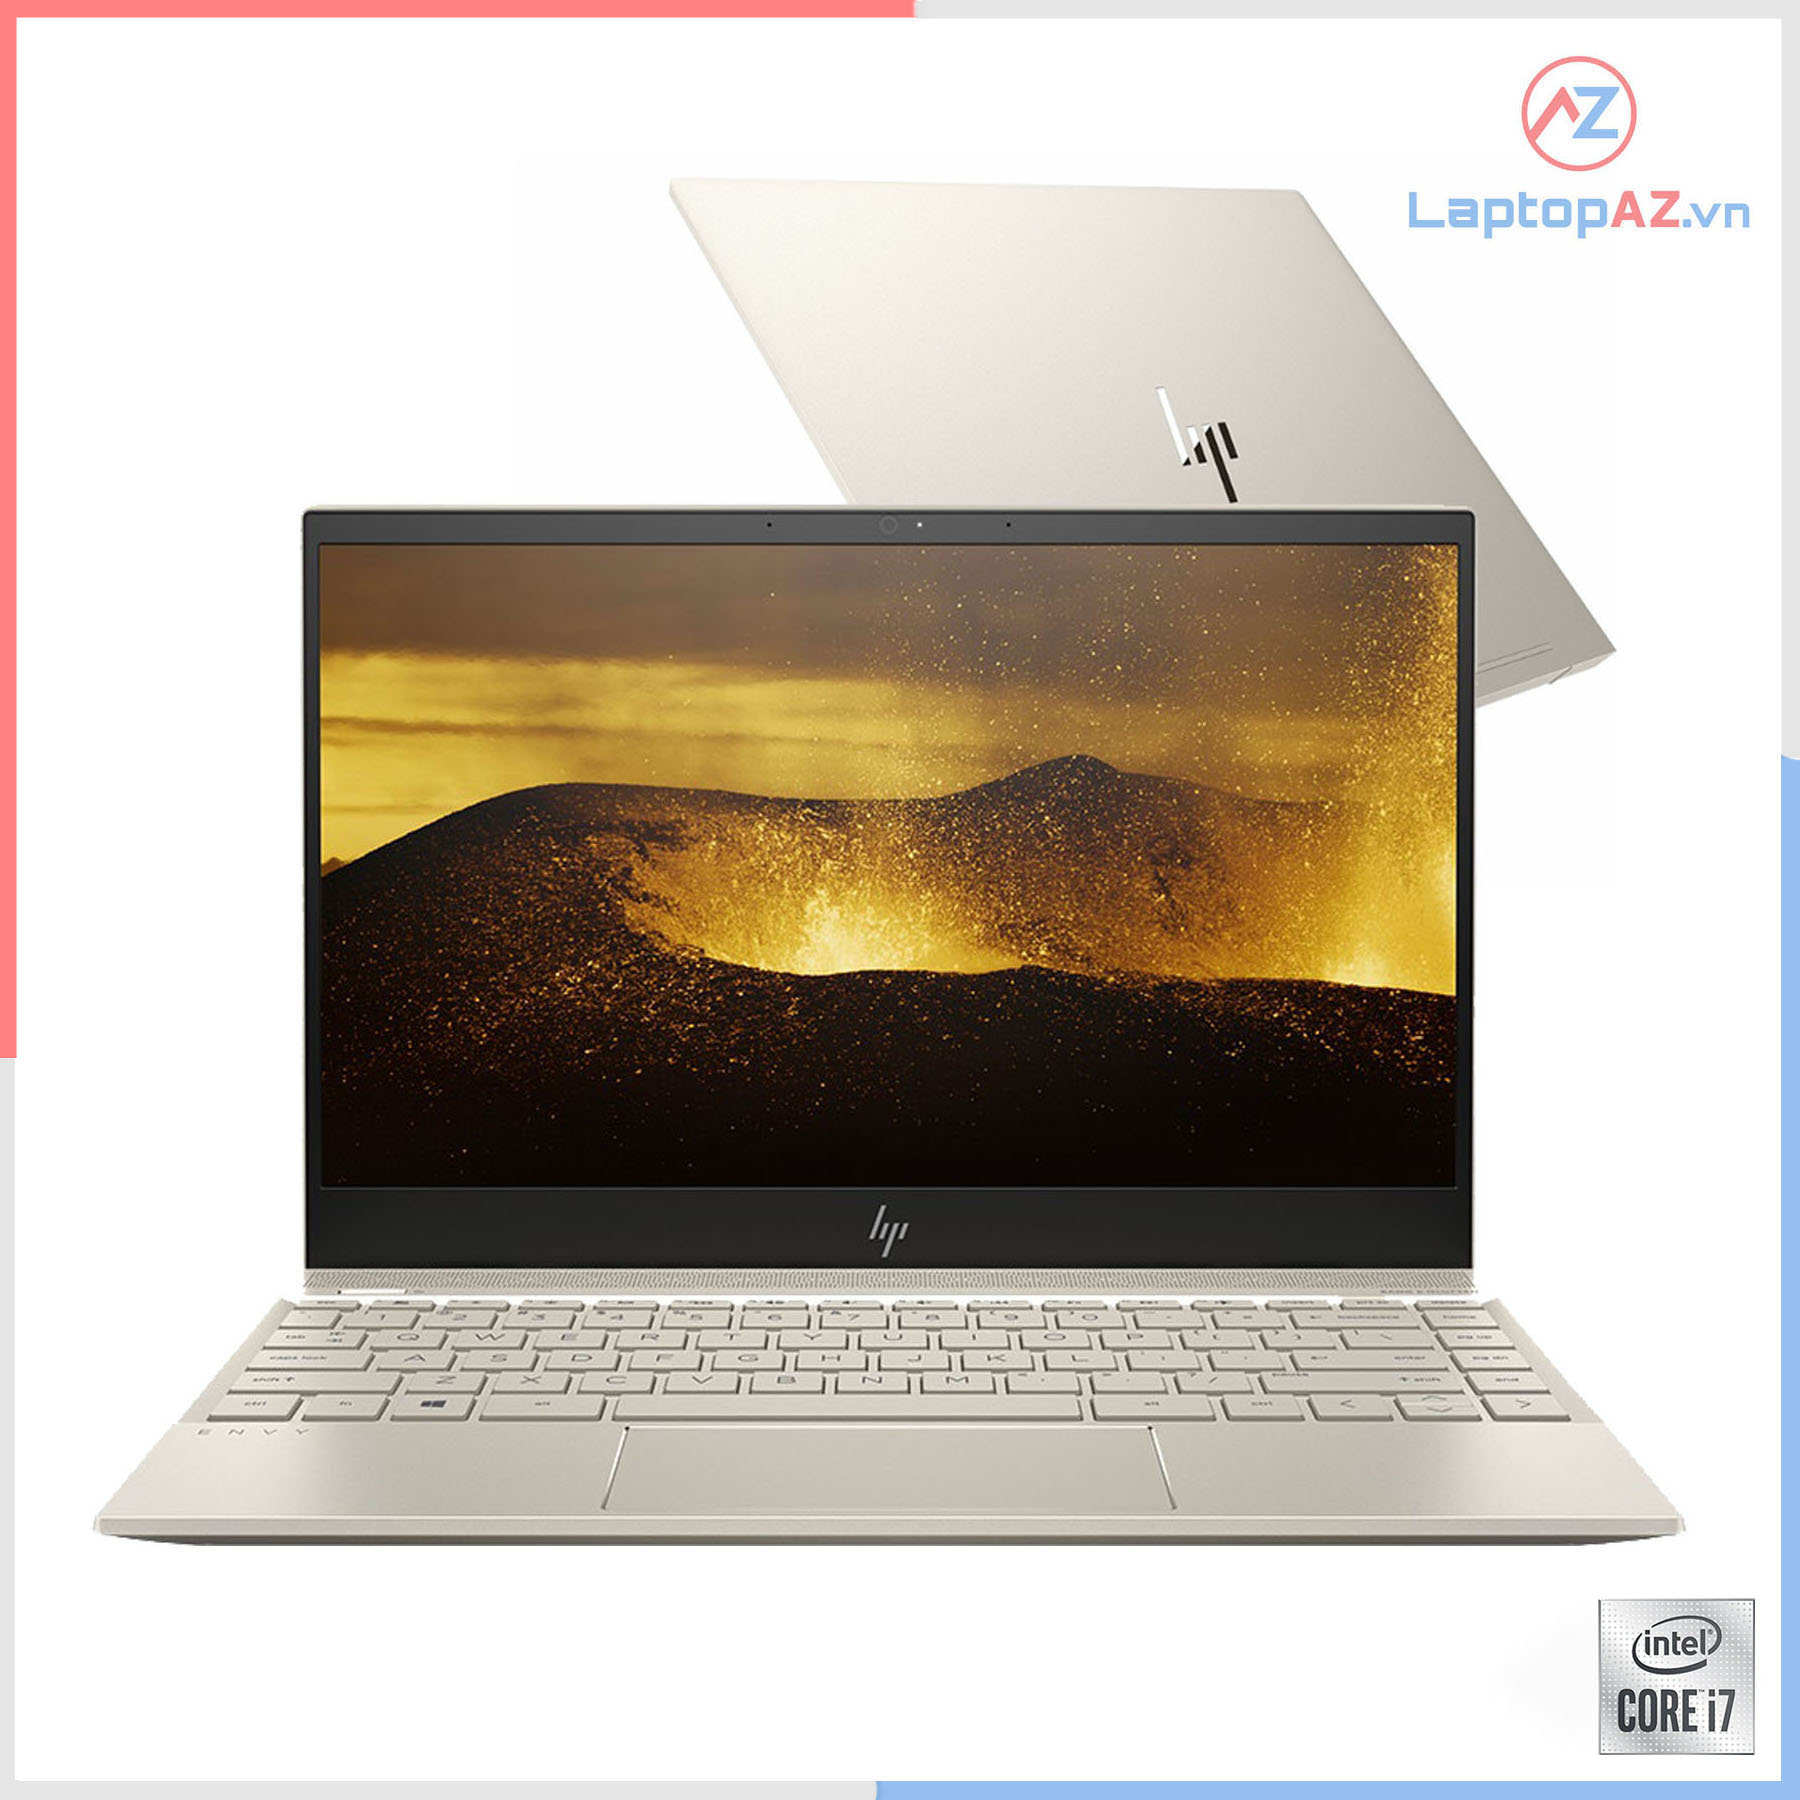 Laptop HP ENVY 13 AD074TU (Core i7-7500U, 8GB, 256GB, VGA Intel UHD Graphics 620,13.3 inch FHD IPS)